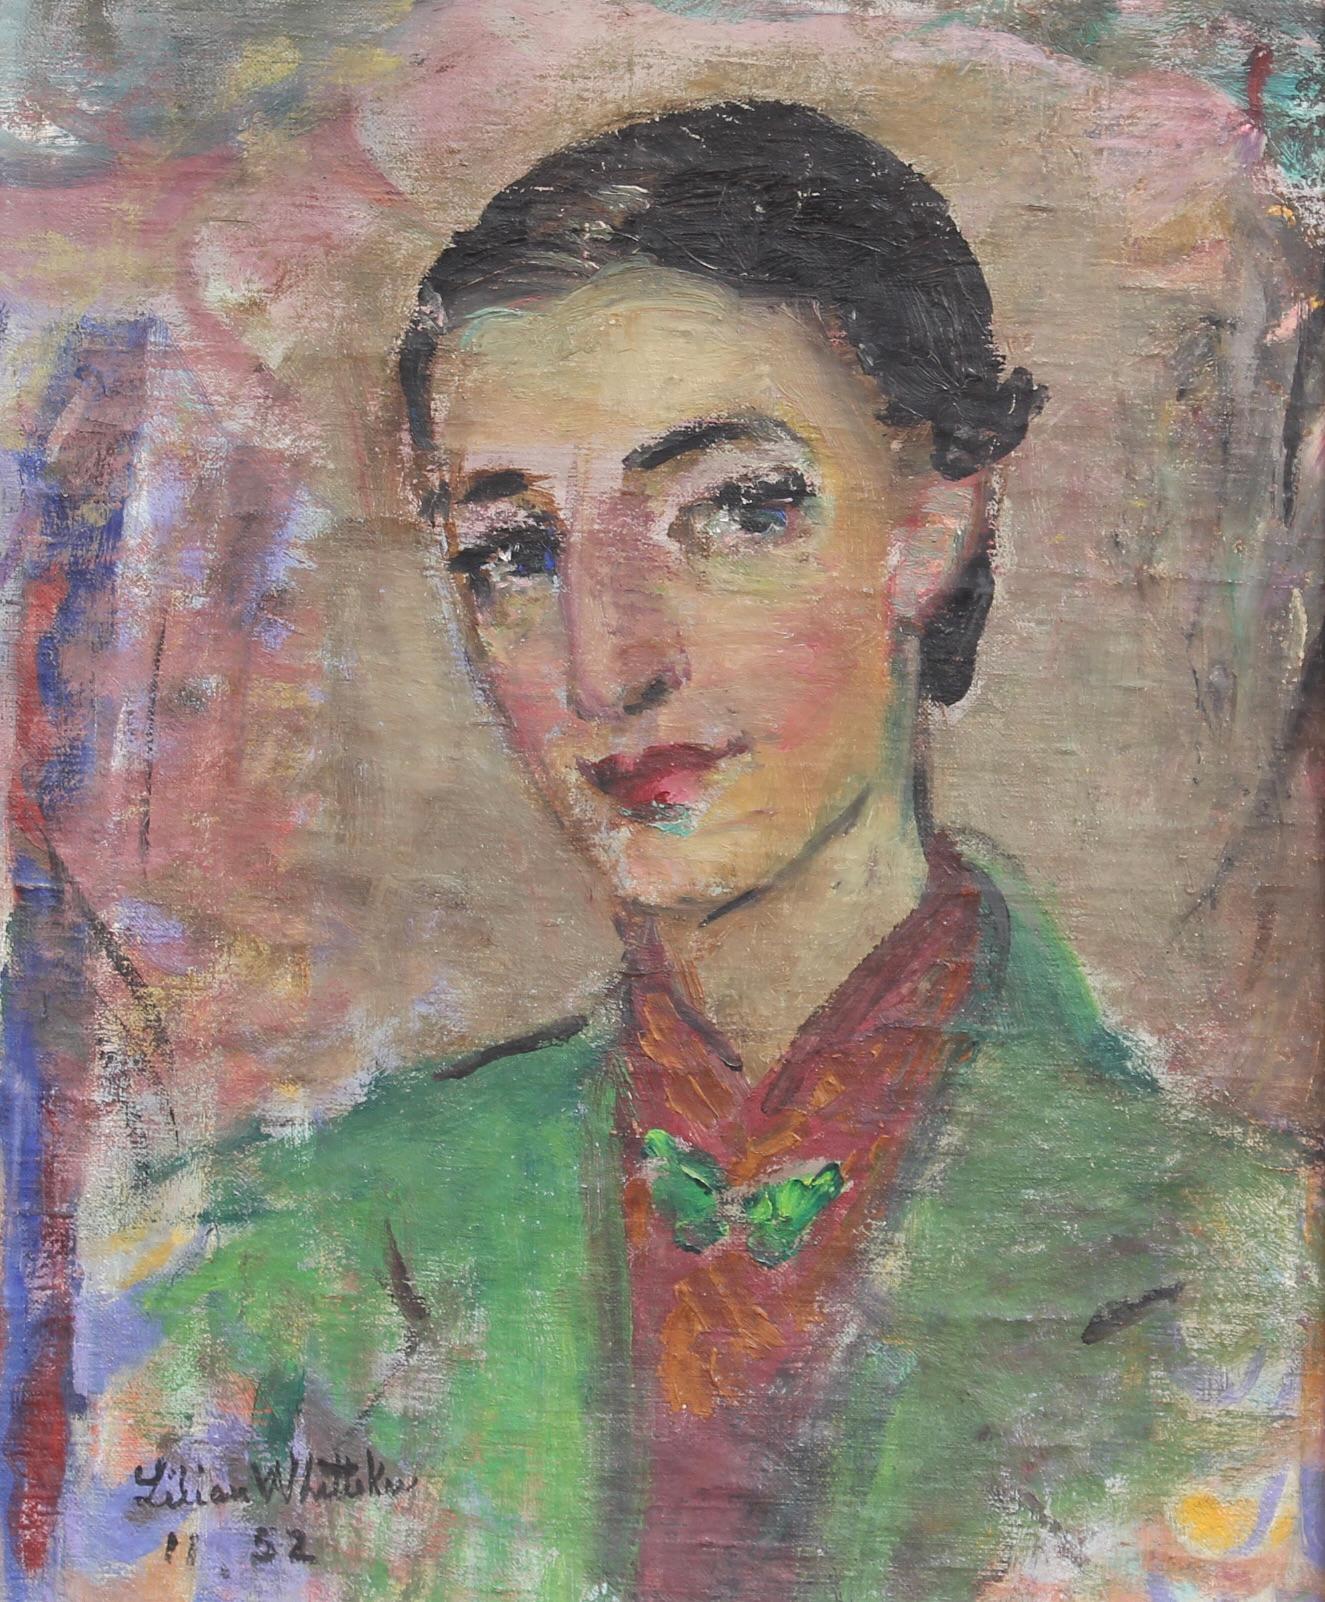 Self-Portrait of the Artist - Painting by Lilian E. Whitteker